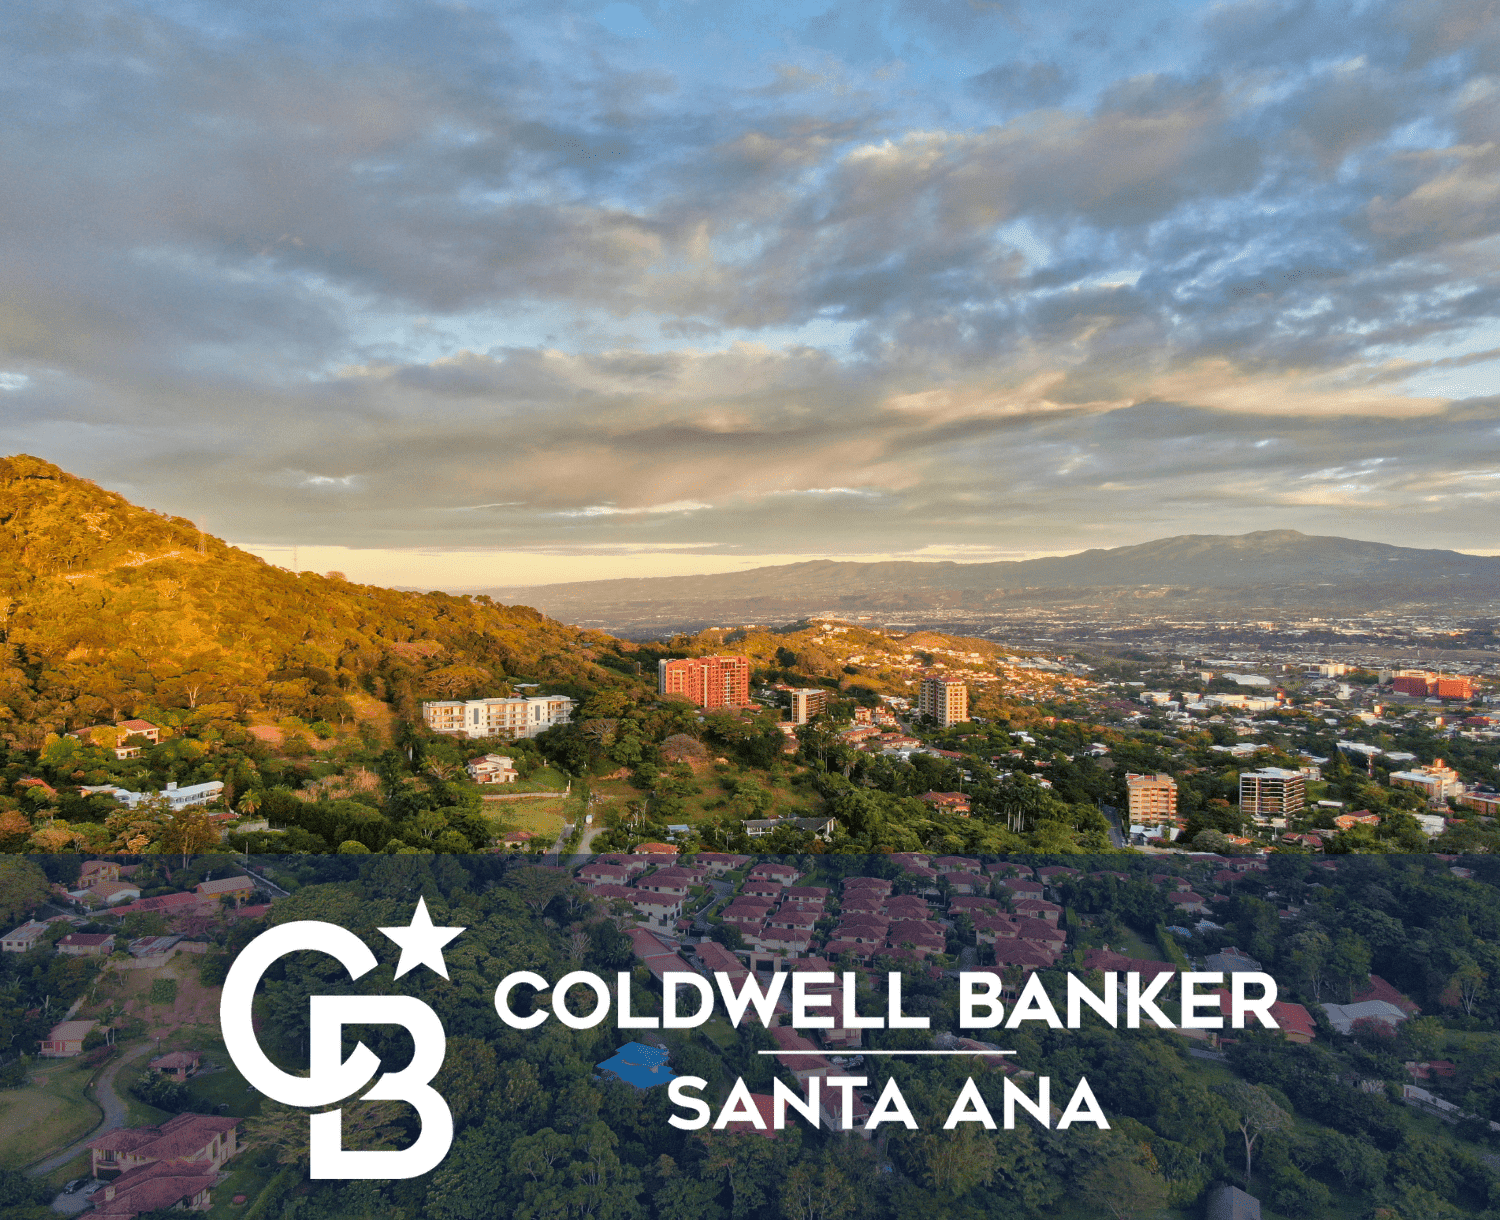 Coldwell Banker Santa Ana Real Estate